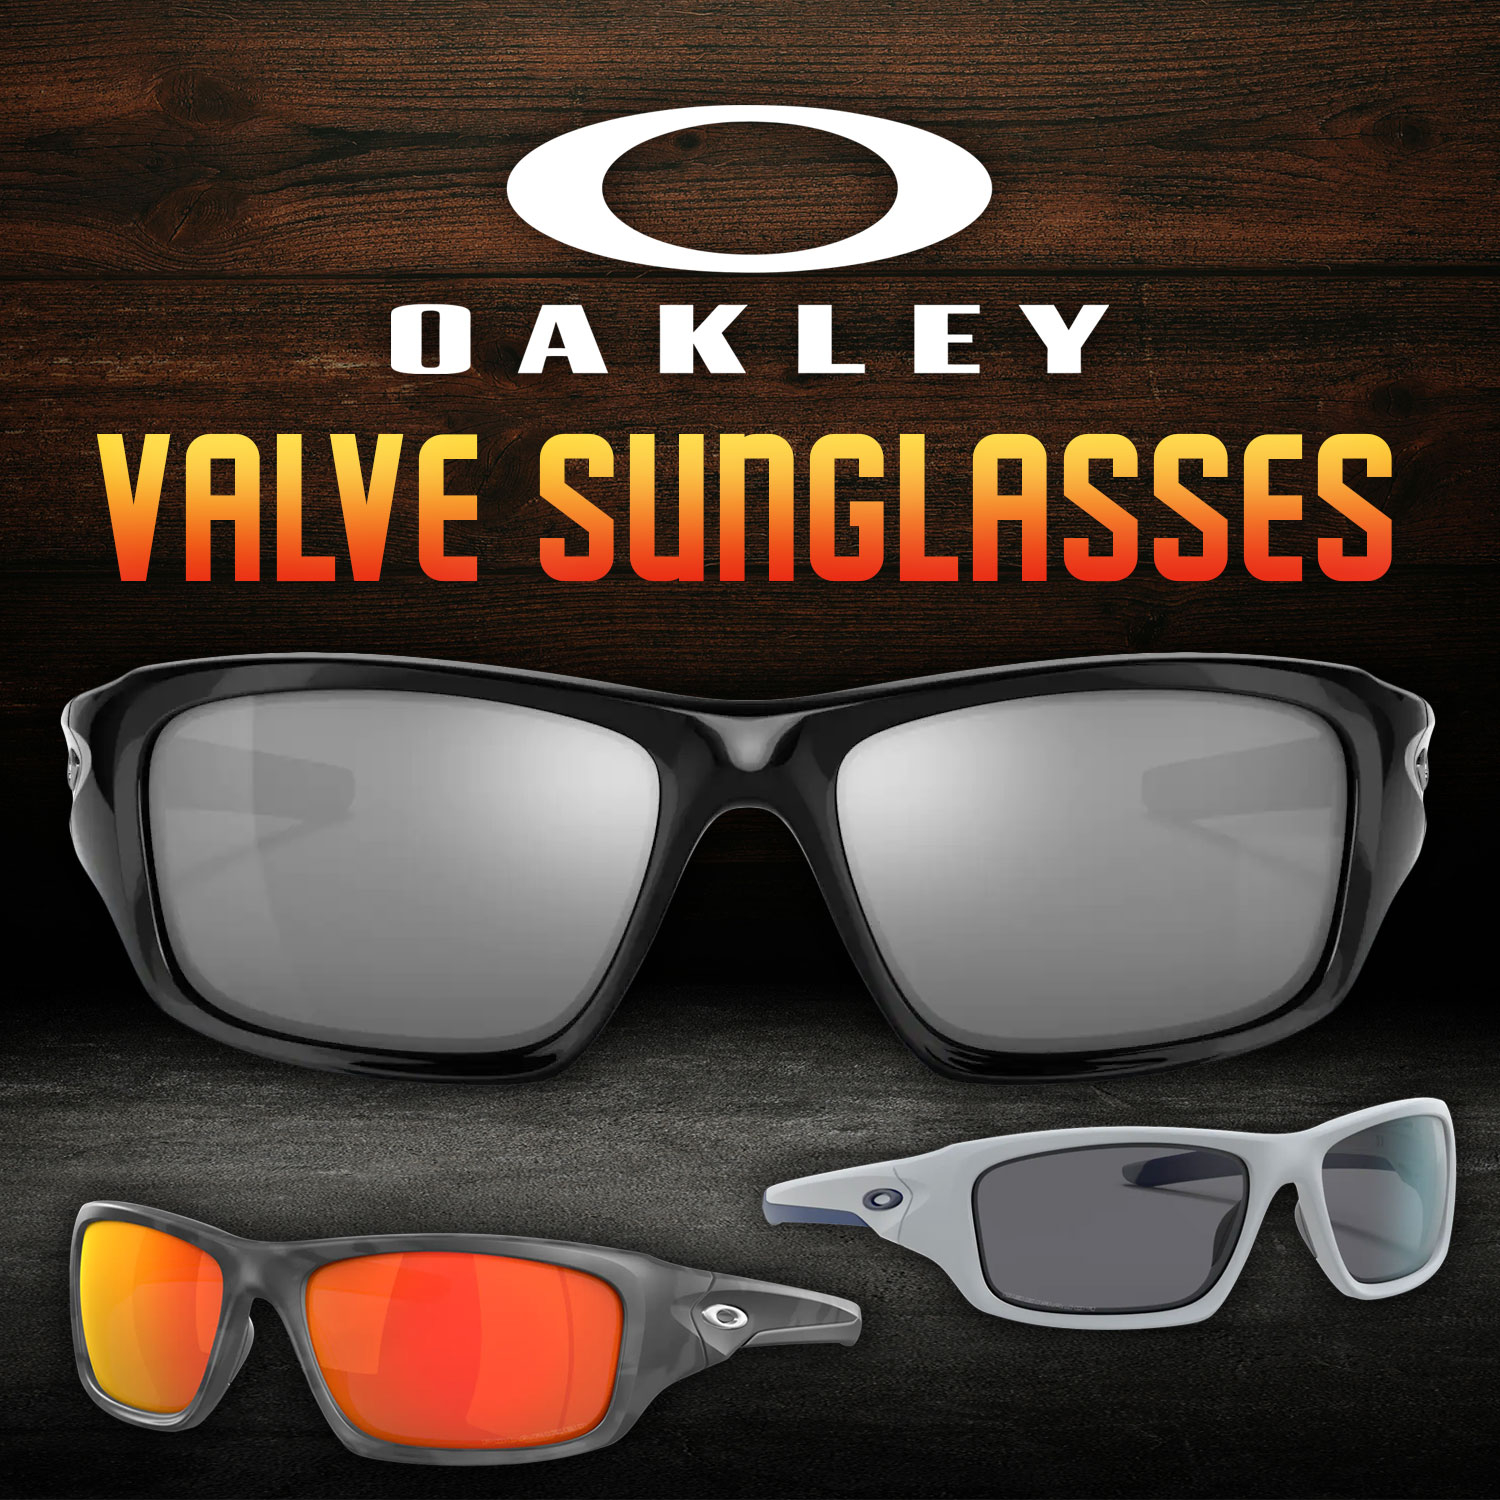 Oakley Valve Sunglasses | Wing Supply